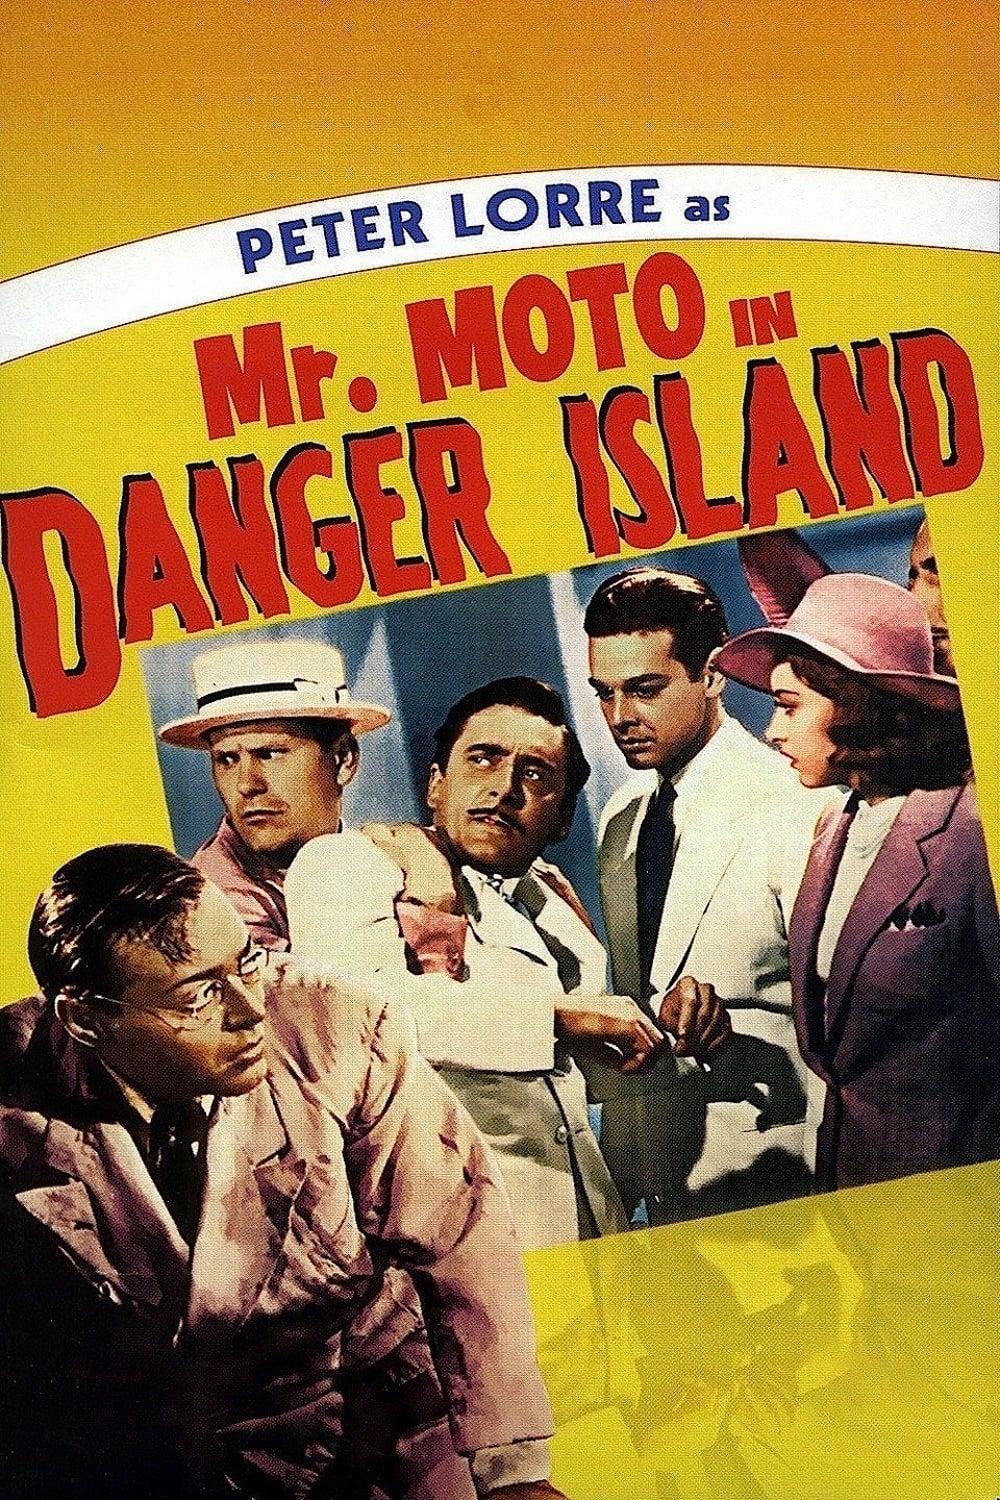 Mr. Moto in Danger Island poster